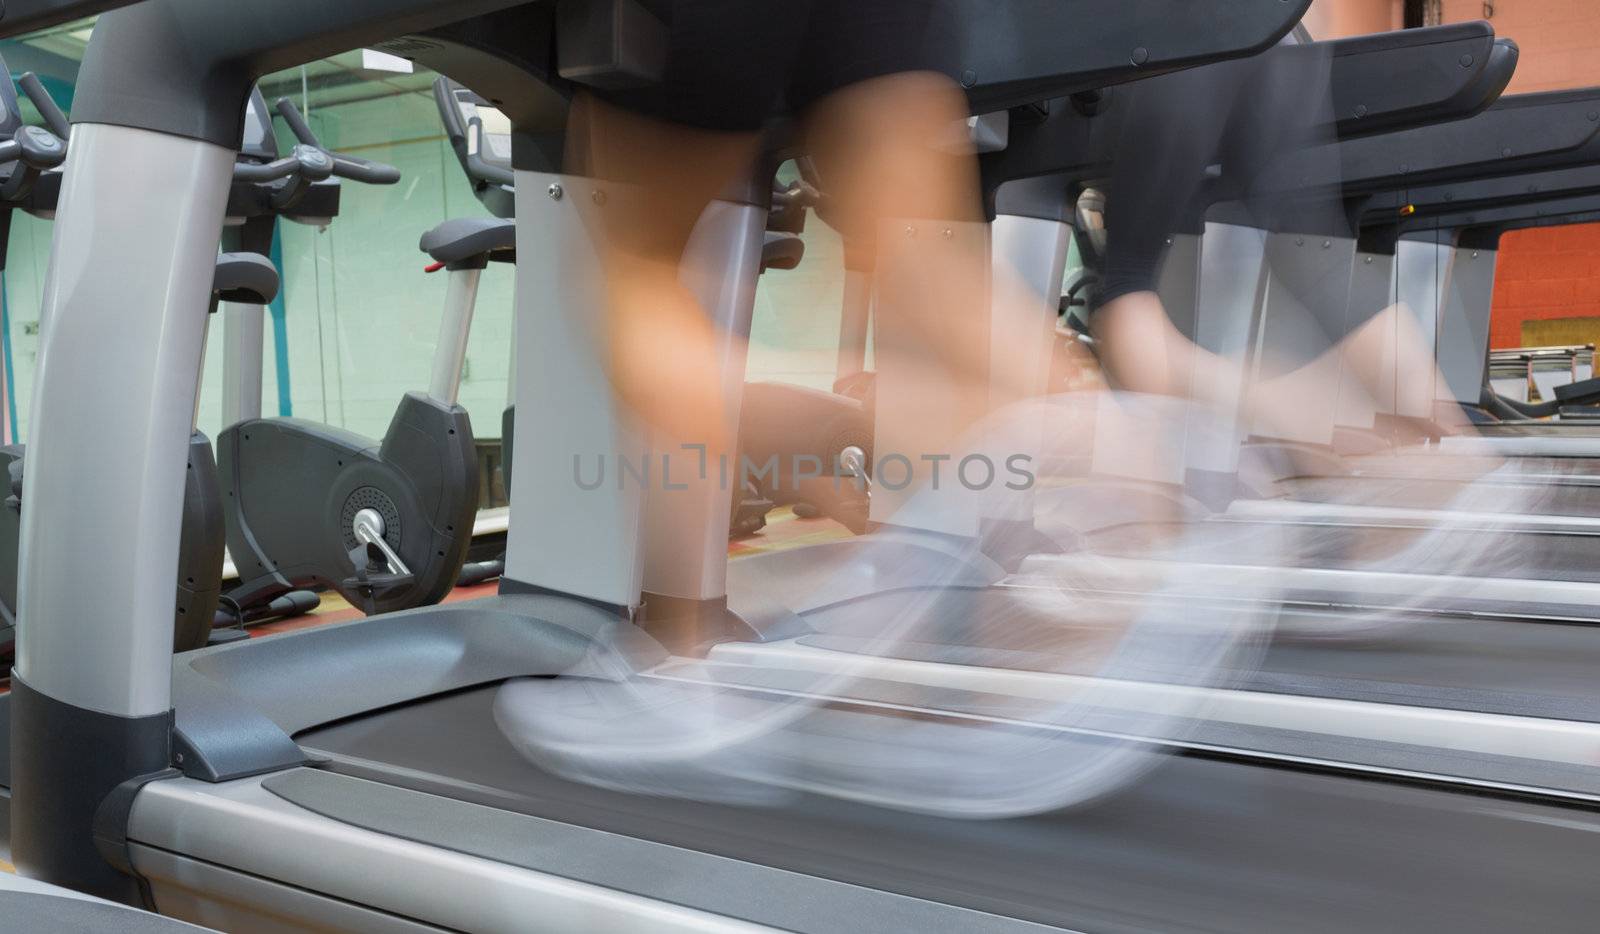 People jogging on a treadmill by Wavebreakmedia